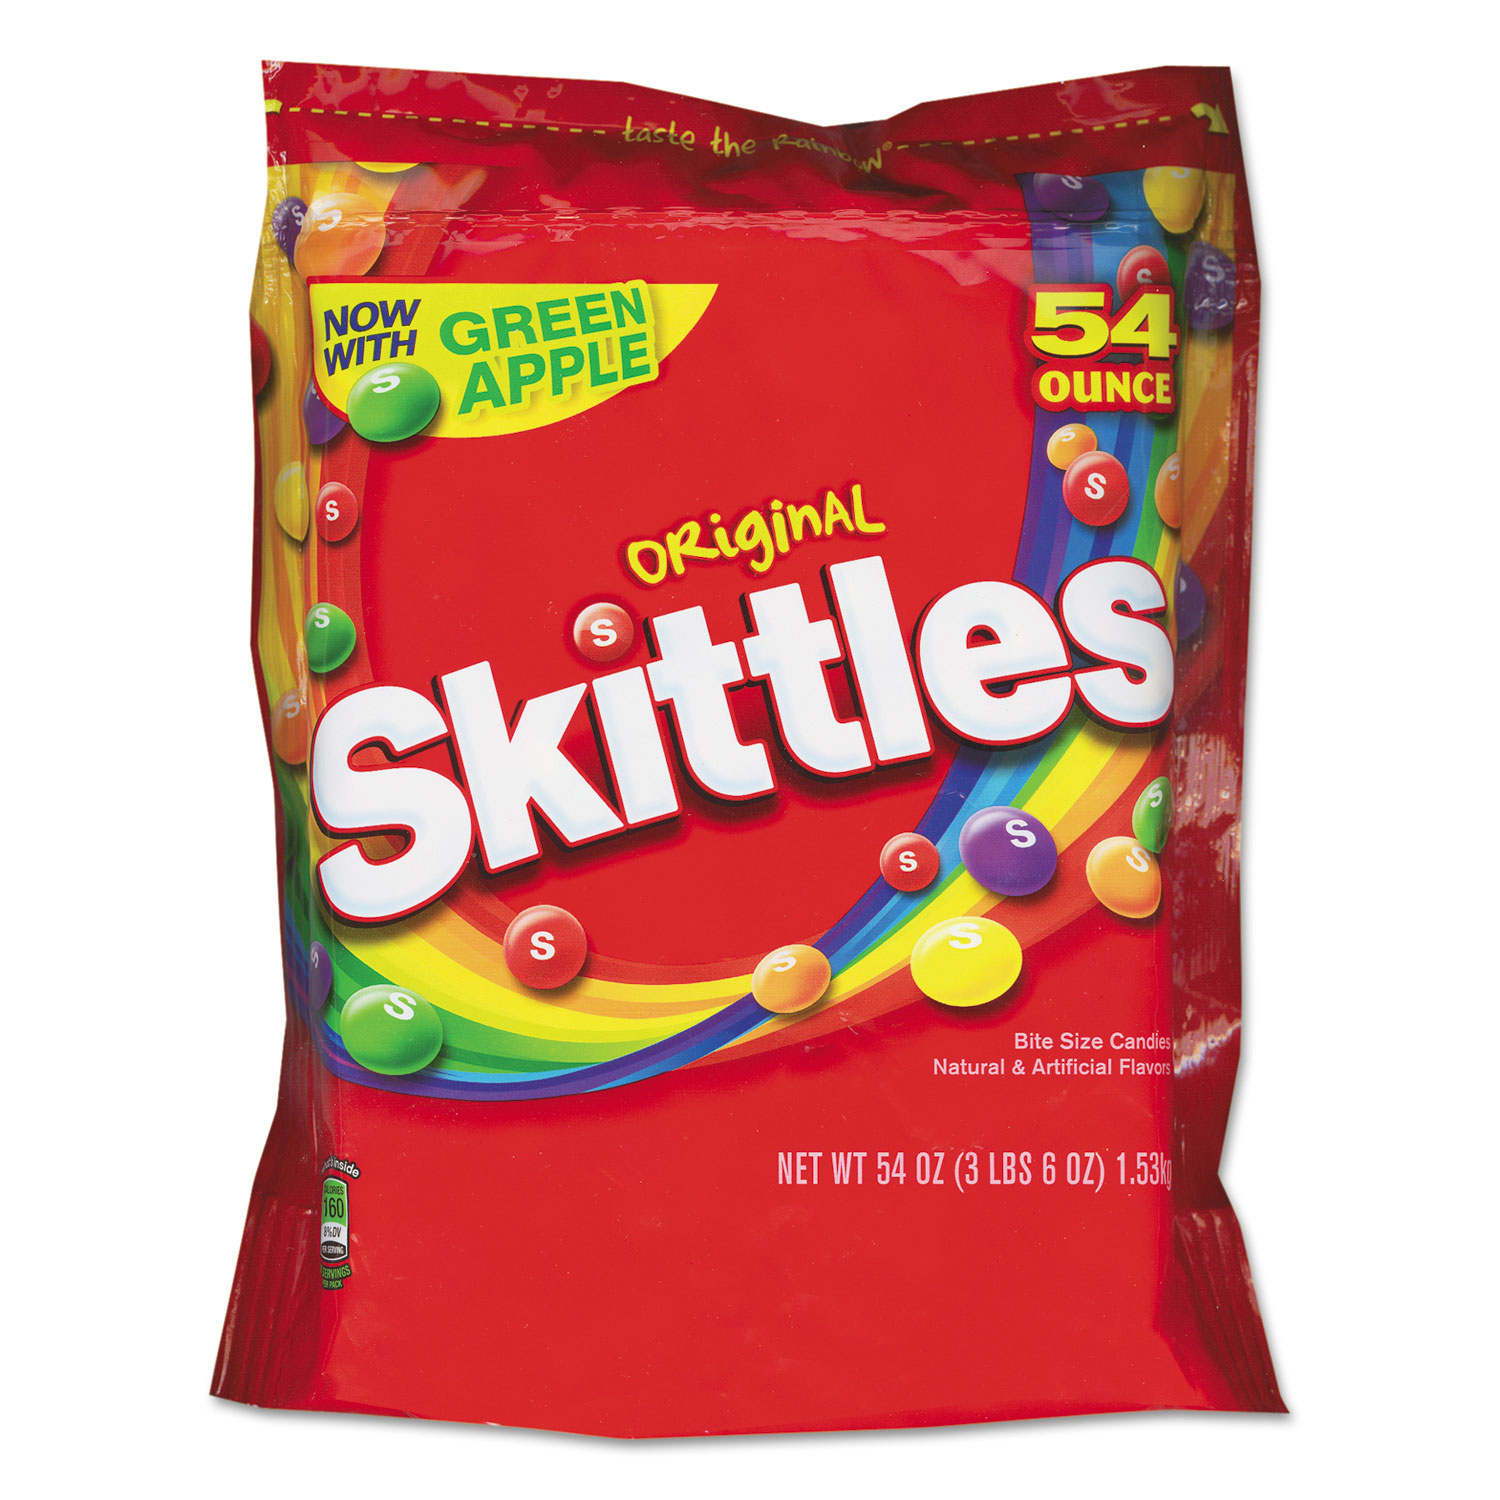  Skittles WMW24552 Chewy Candy, 3 lbs 6 oz Bag, Original (SKT24552) 